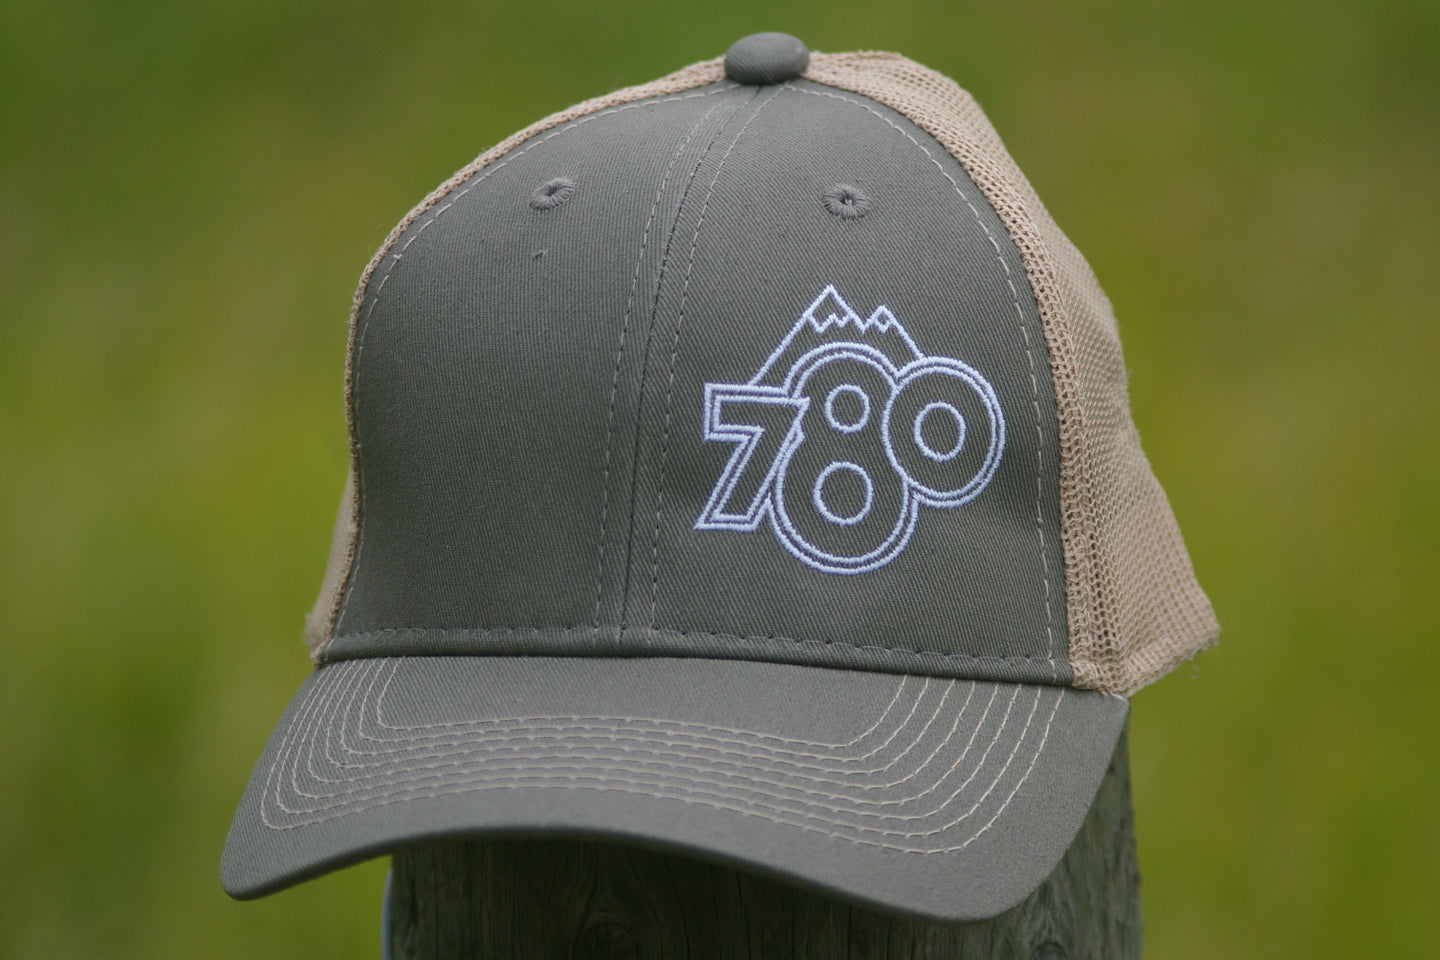 Classic 780 Clothing Company hat - Grey